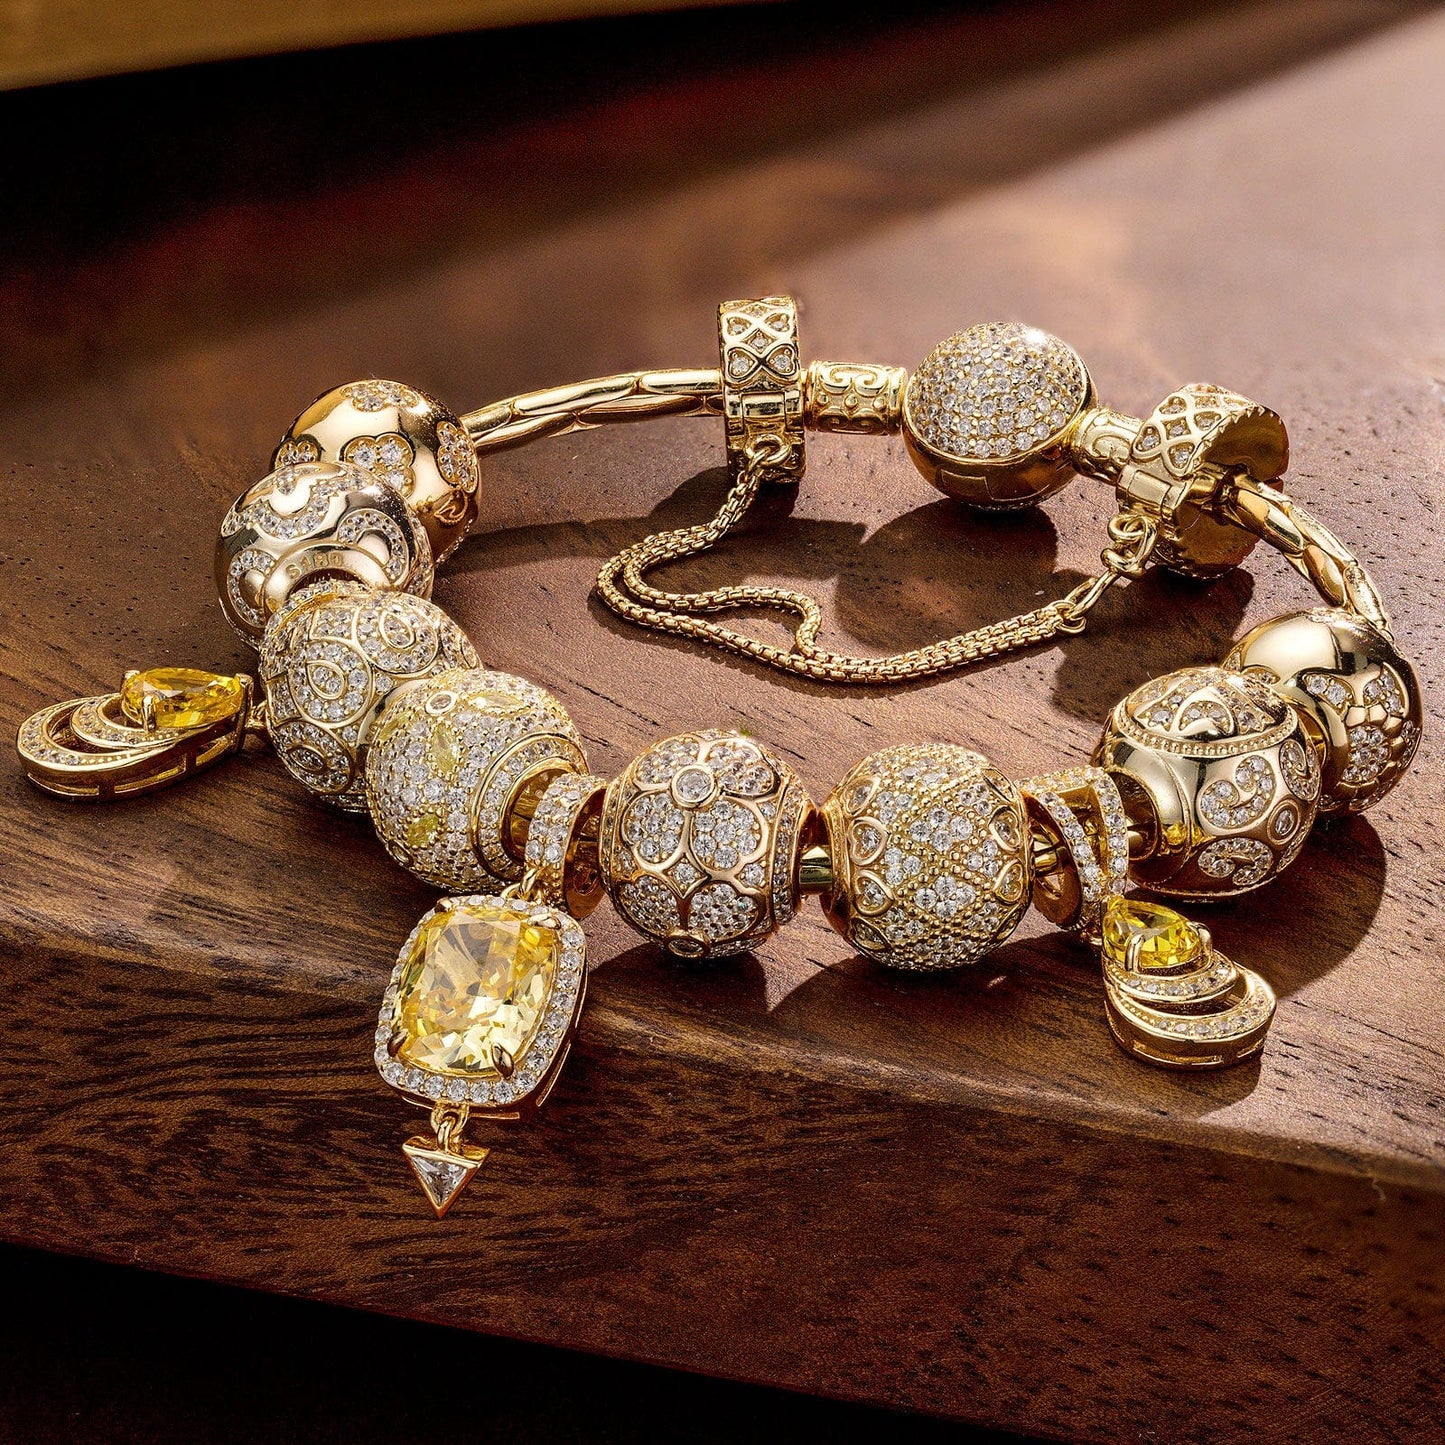 Sterling Silver Clover's Golden Glow Charms Bracelet Set In 14K Gold Plated